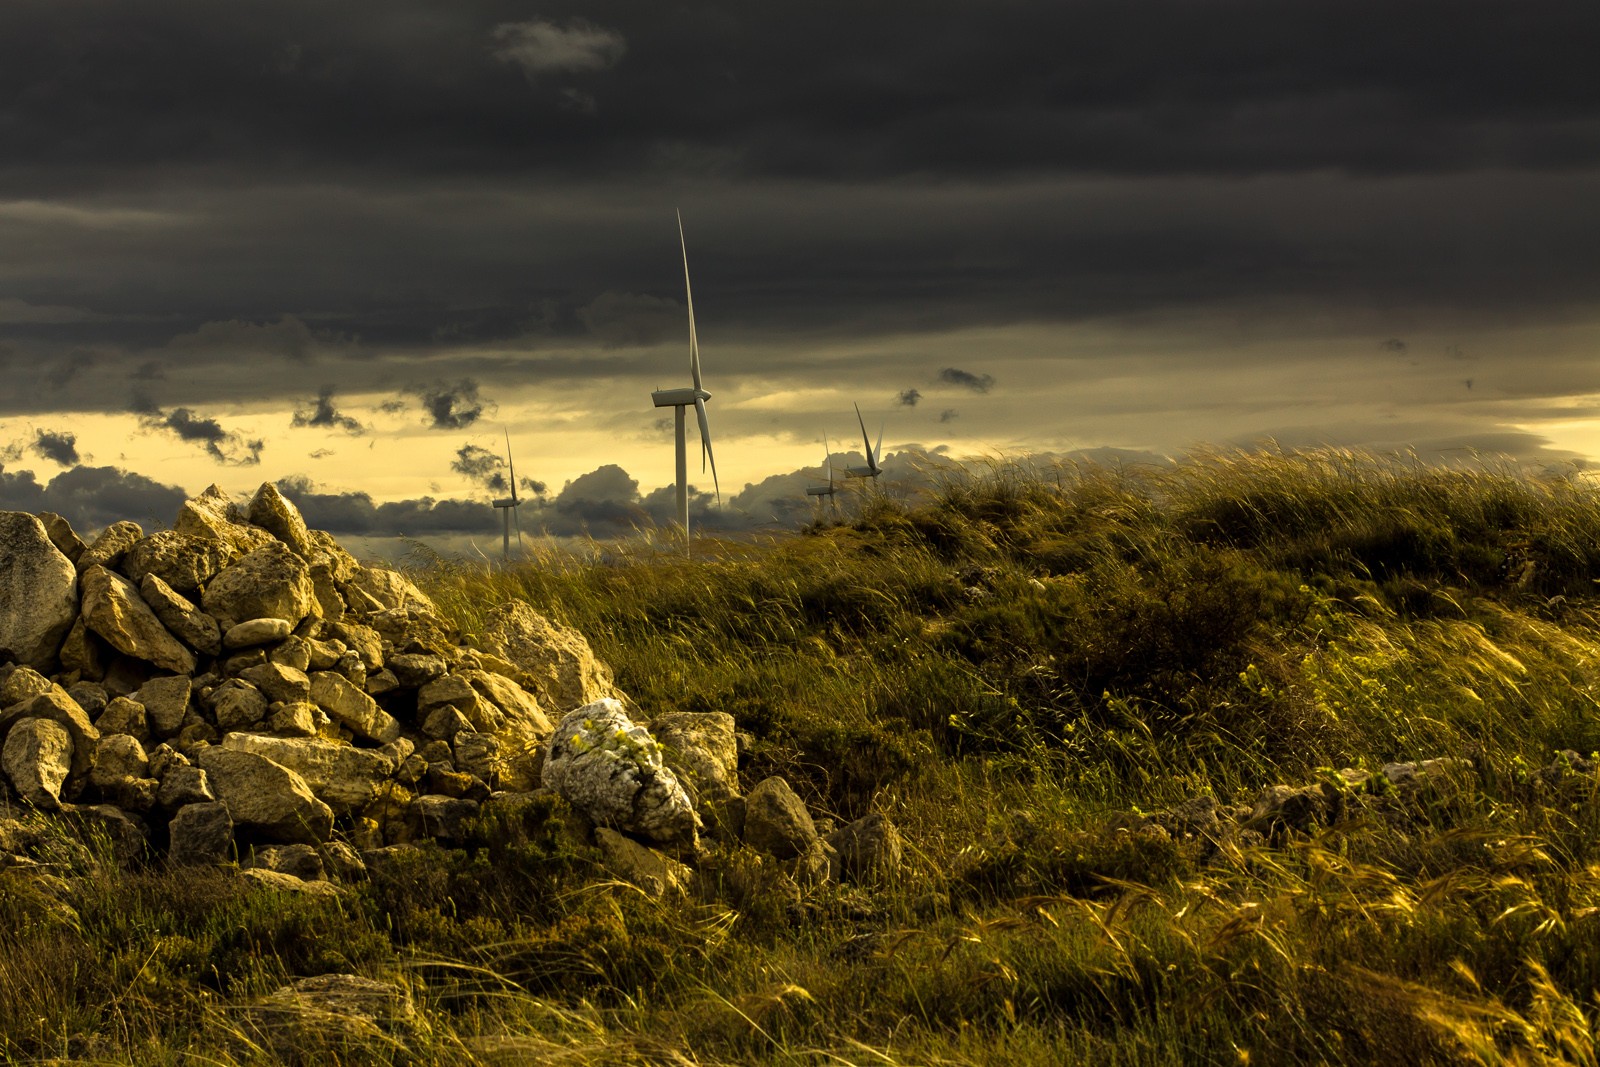 General 1600x1067 landscape nature photography clouds mist mountains hills wind turbine rocks